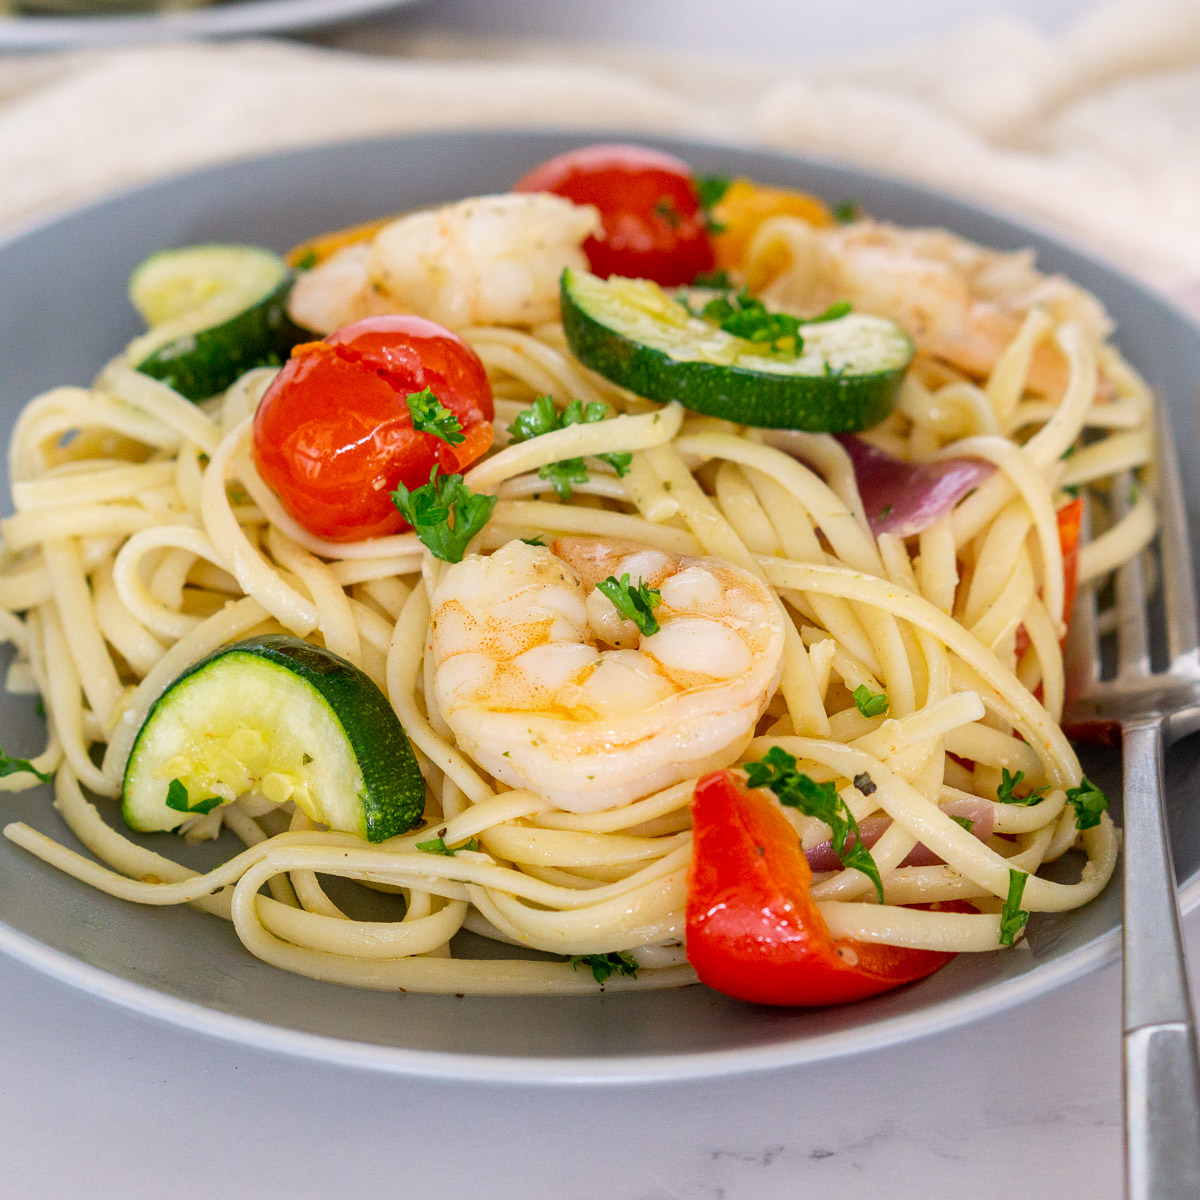 shrimp and vegetable linguine on a plate